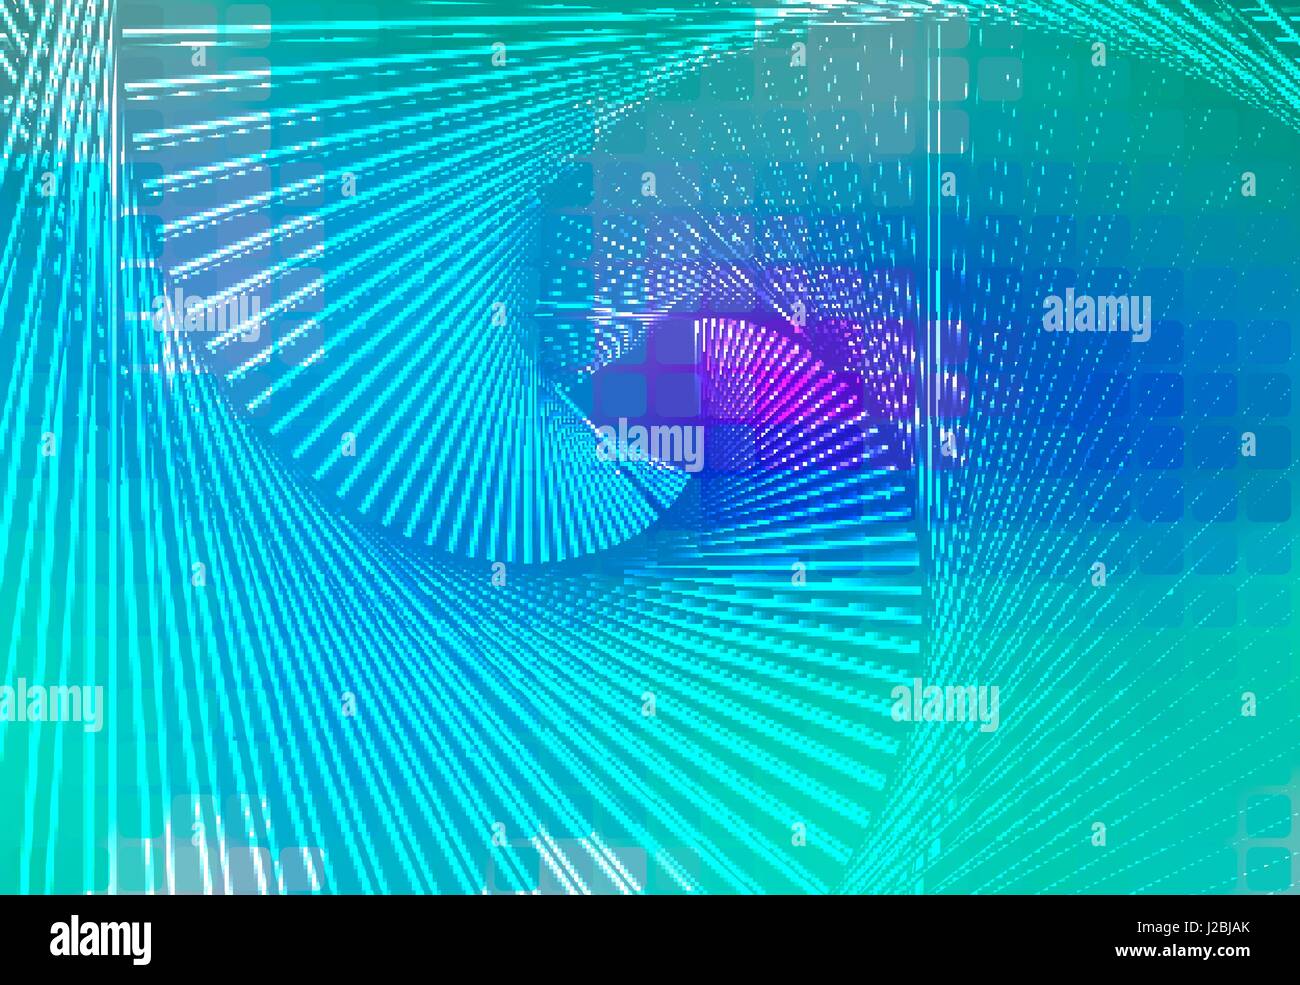 Türkis blau lila leuchtende Spirale Vektor abstrakten Hintergrund Stock Vektor